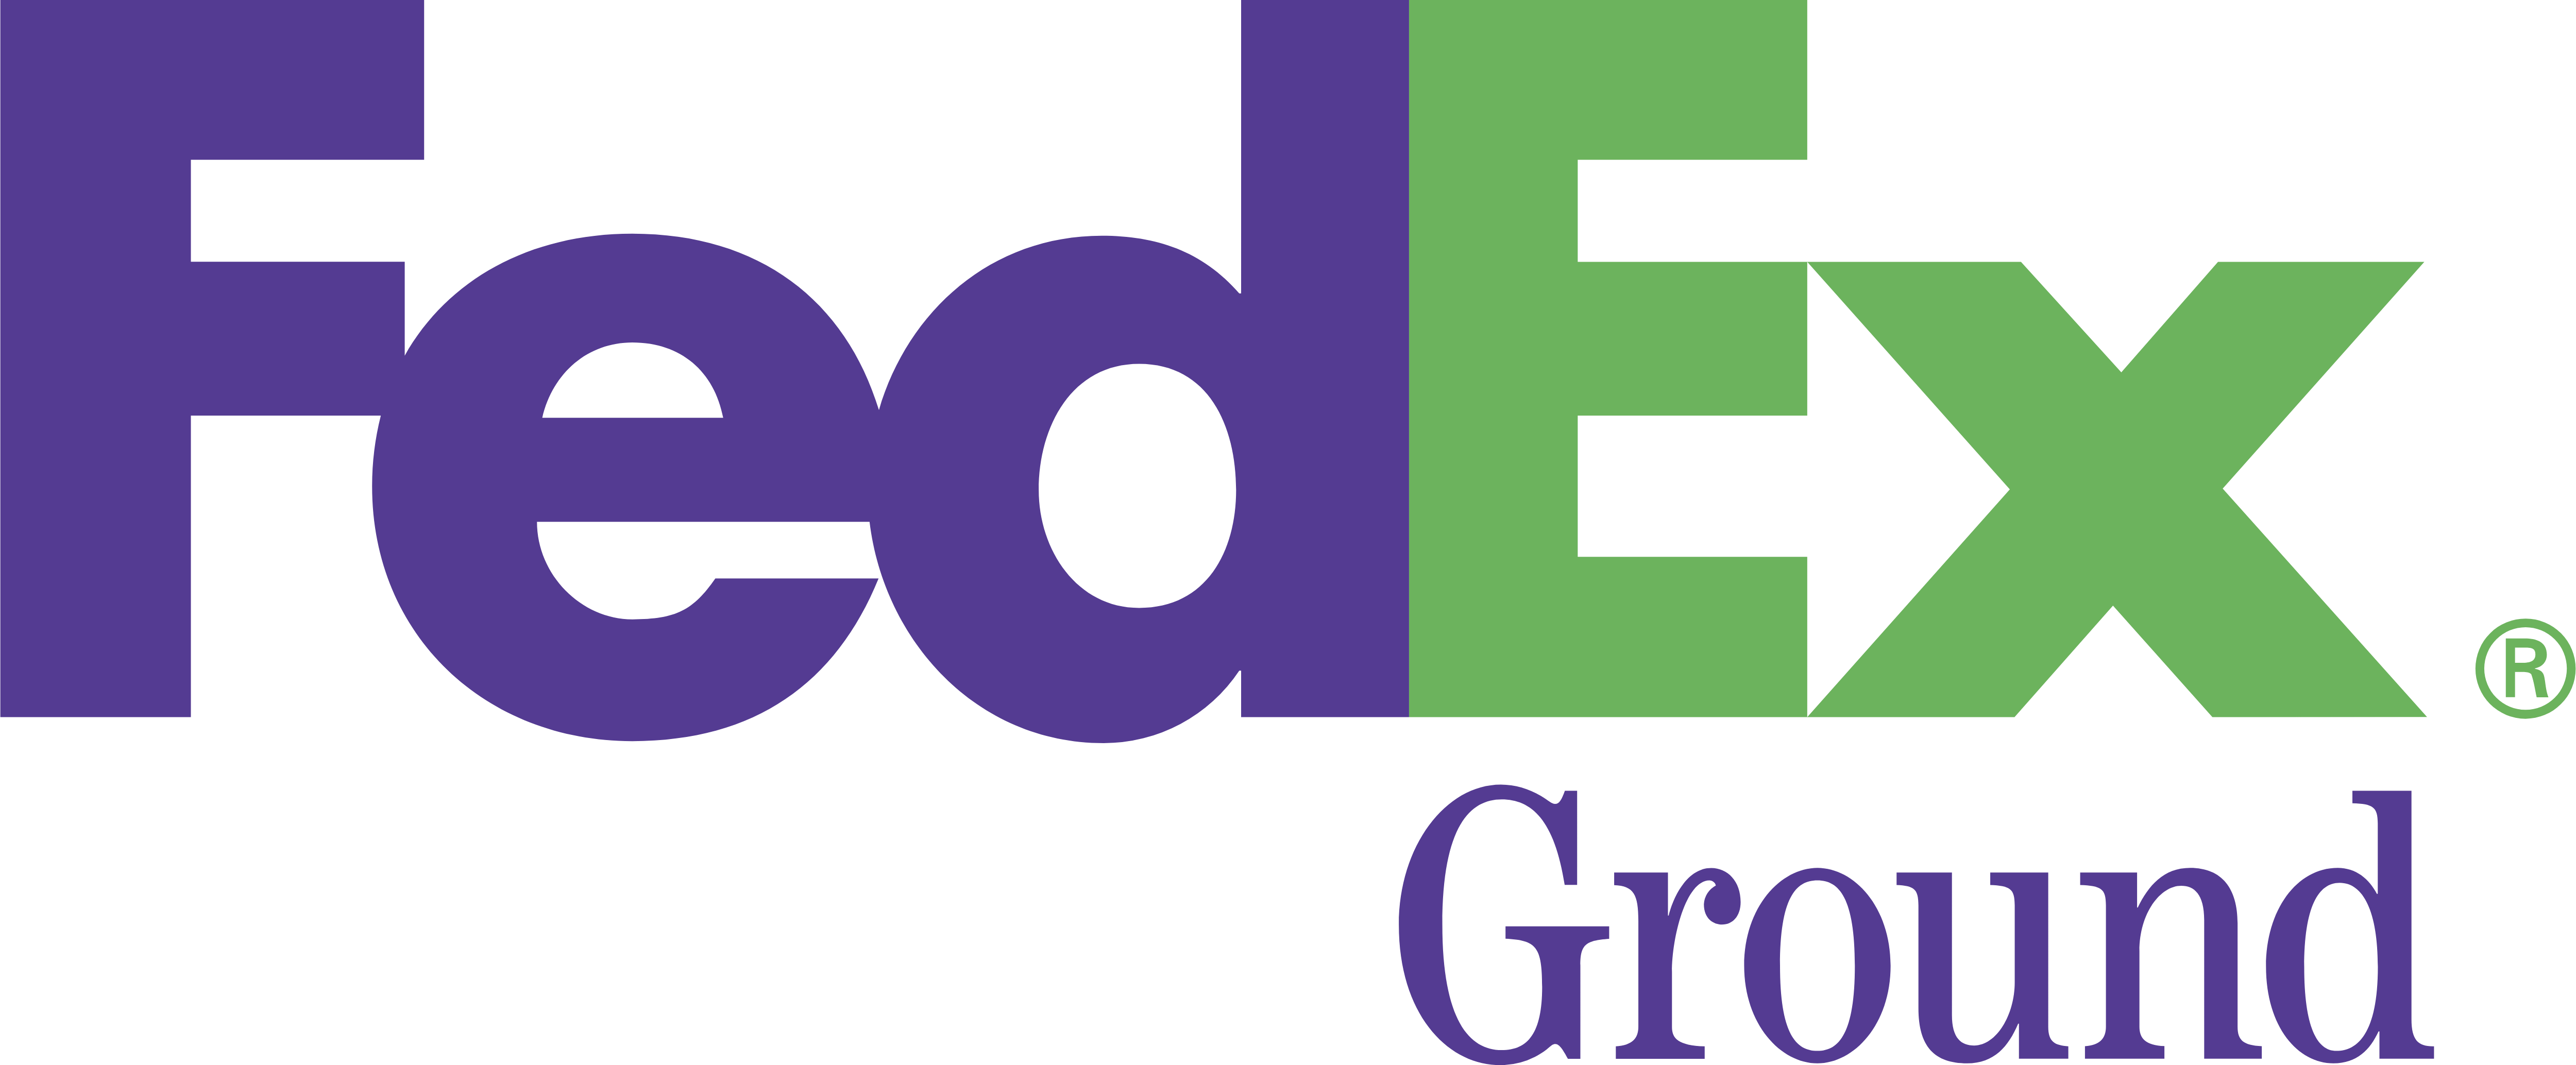 Purple and Green Logo - FedEx – Logos Download